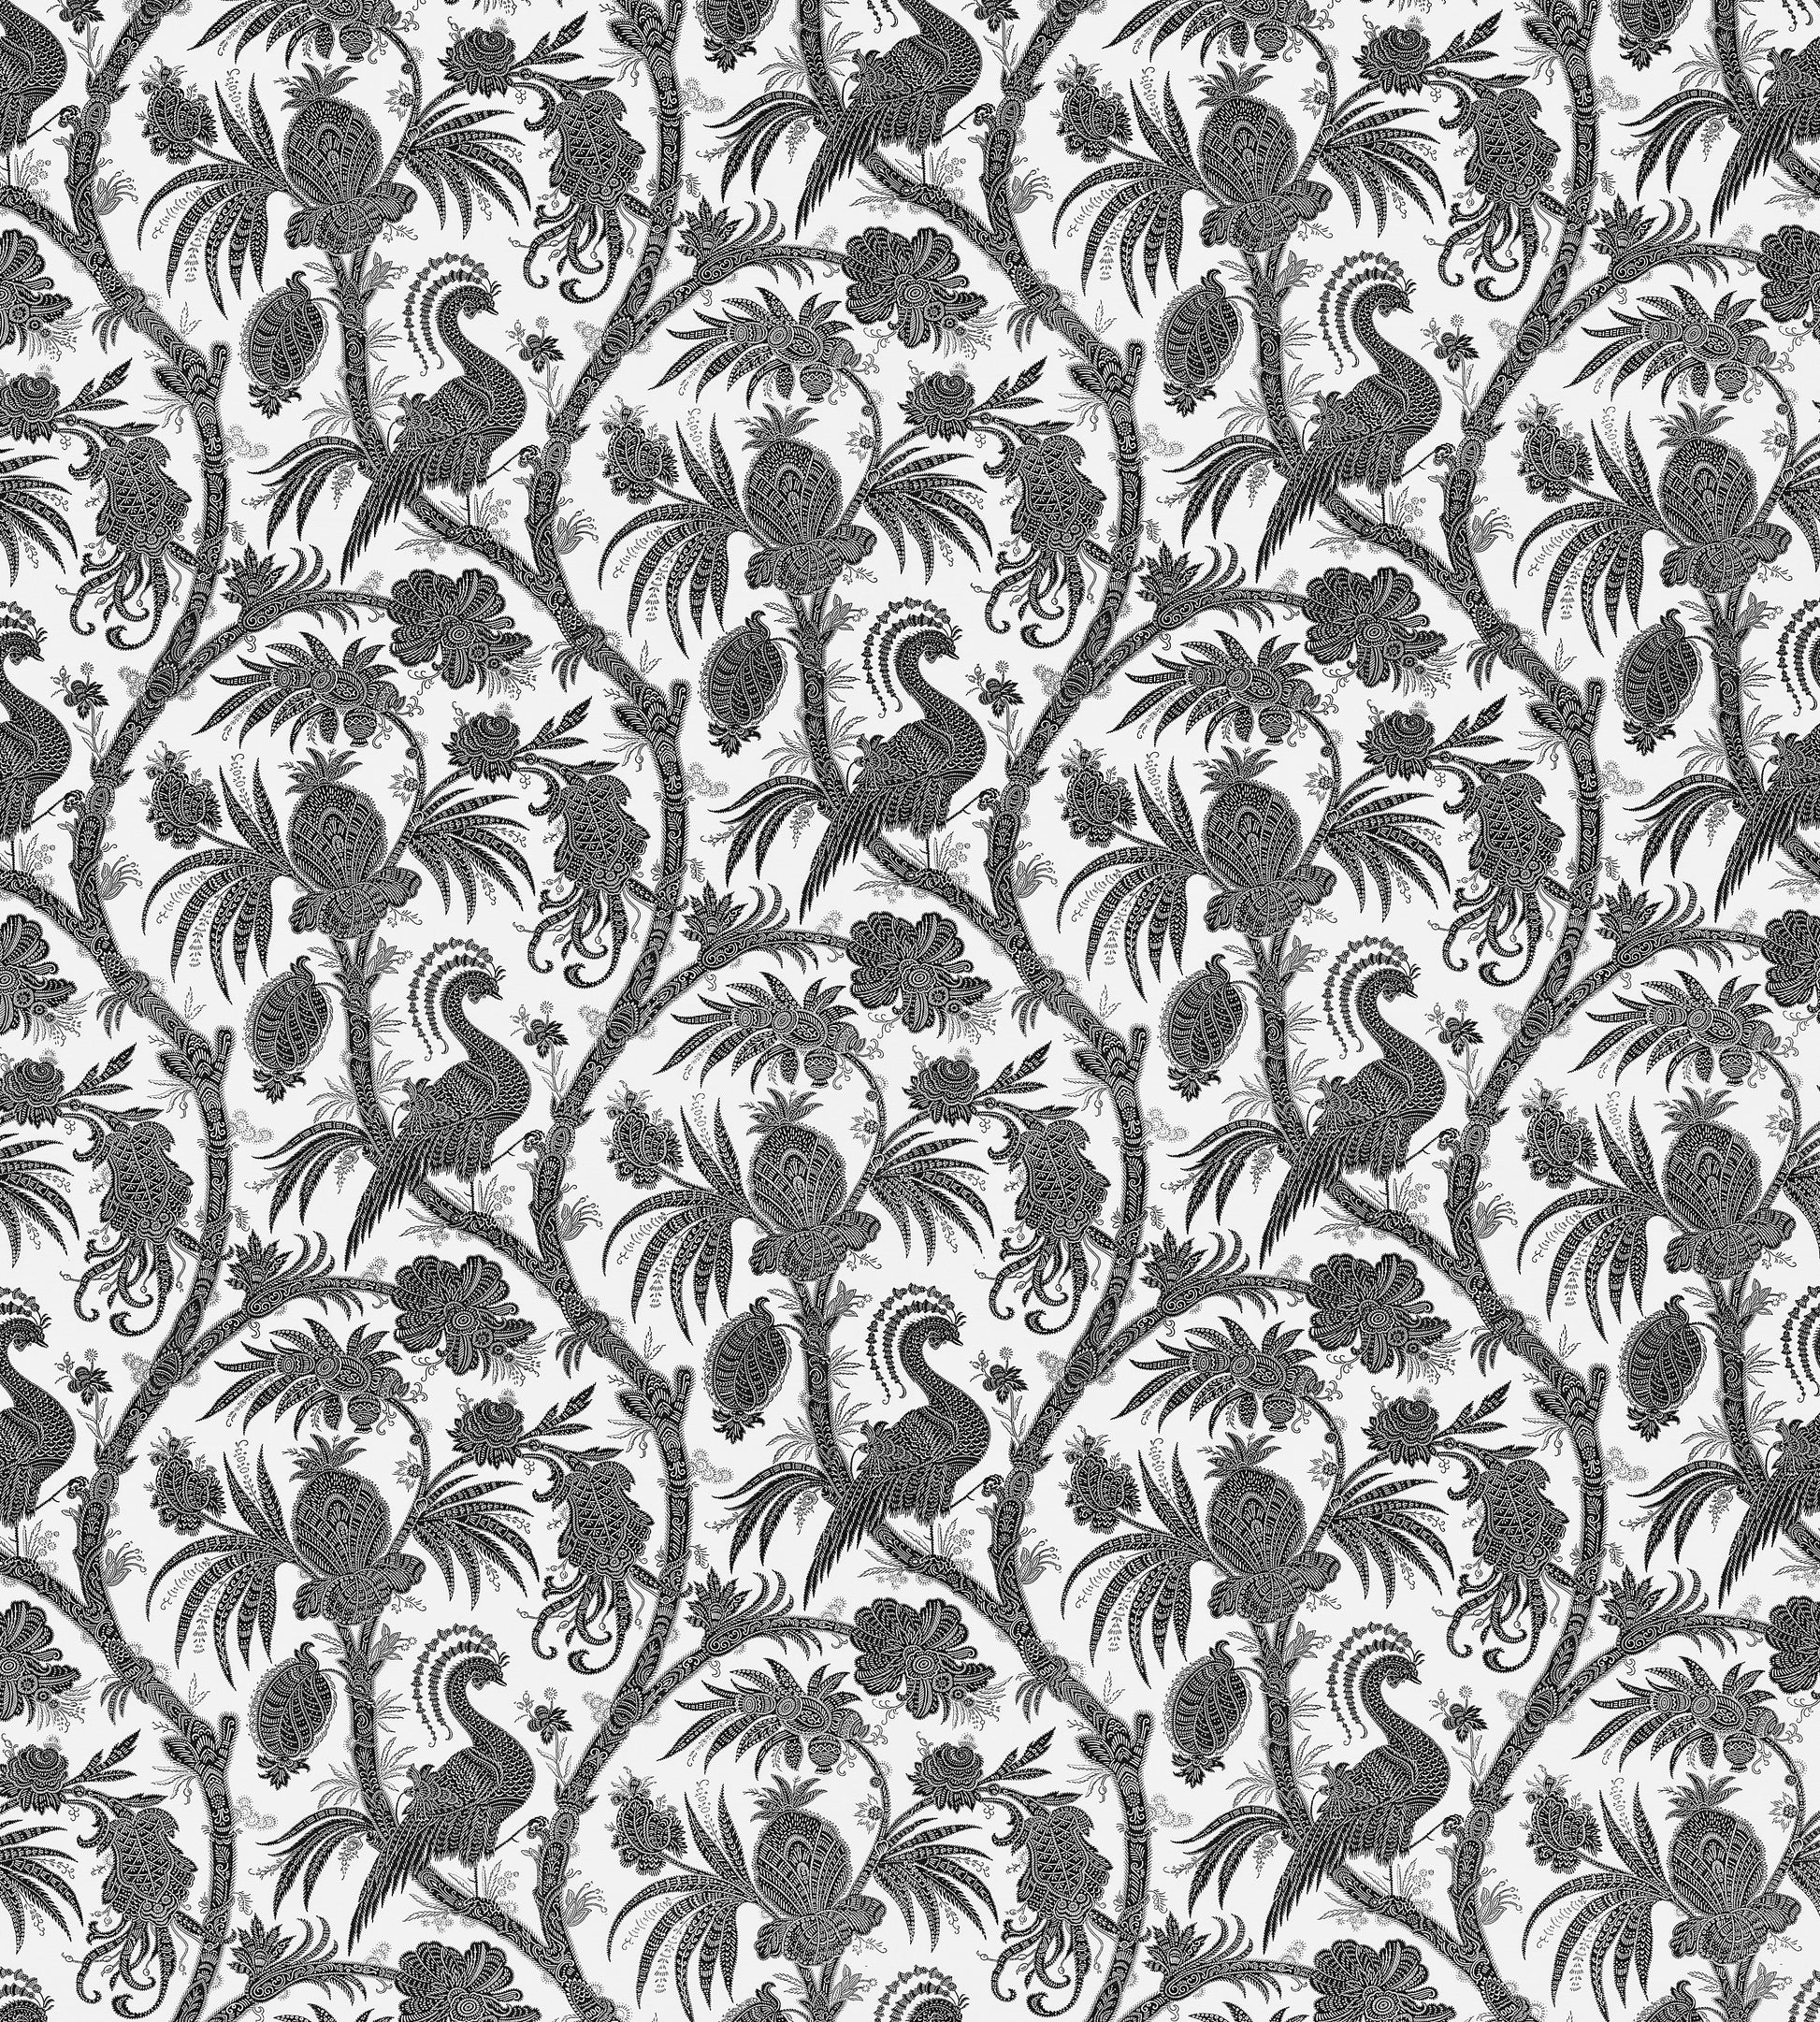 Purchase Scalamandre Fabric Pattern number SC 000416575, Balinese Peacock Linen Print Mandarin 2